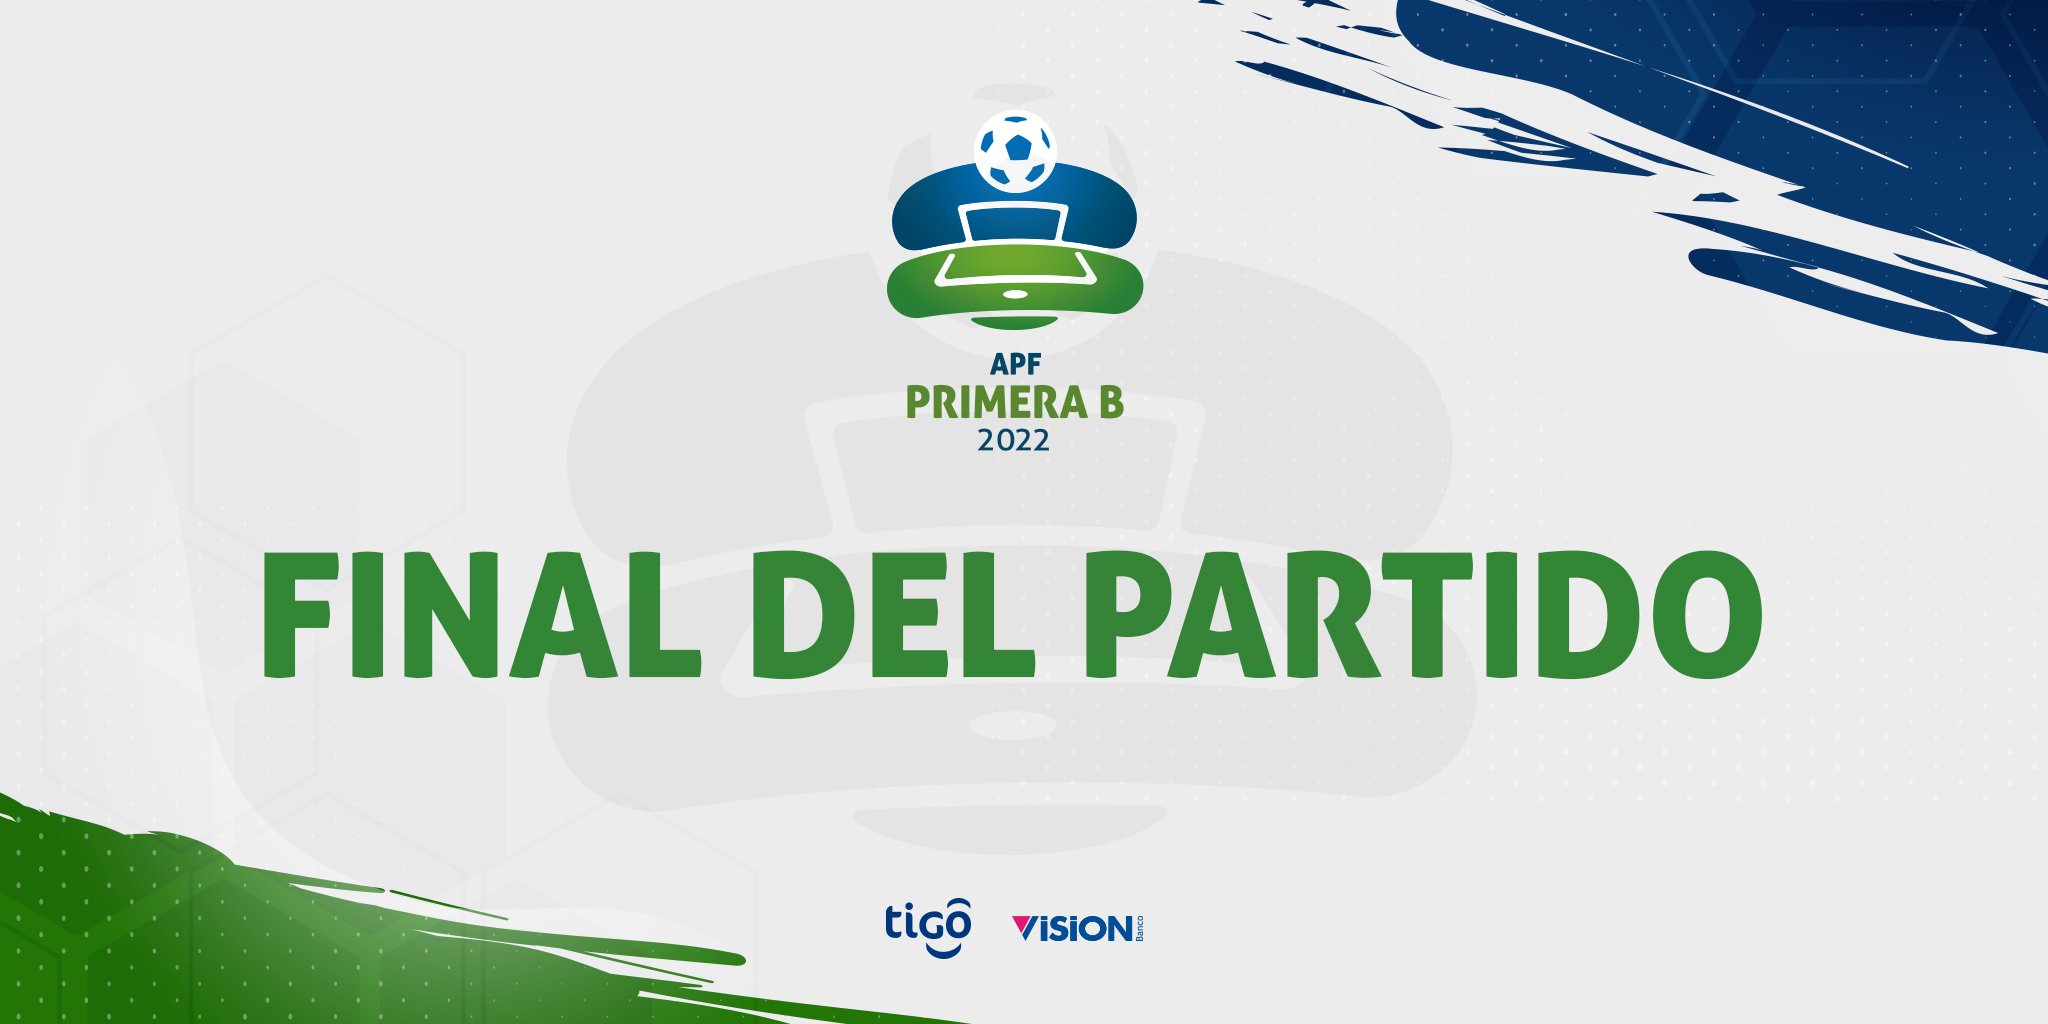 APF Primera División B on Twitter: "#APFPrimeraB ⚽ 🗣️ del partido! ➡️ #PdteHayes ➡️ #29deSetiembre 🗓️ Fecha 6 https://t.co/n7RTna6hX0" / Twitter